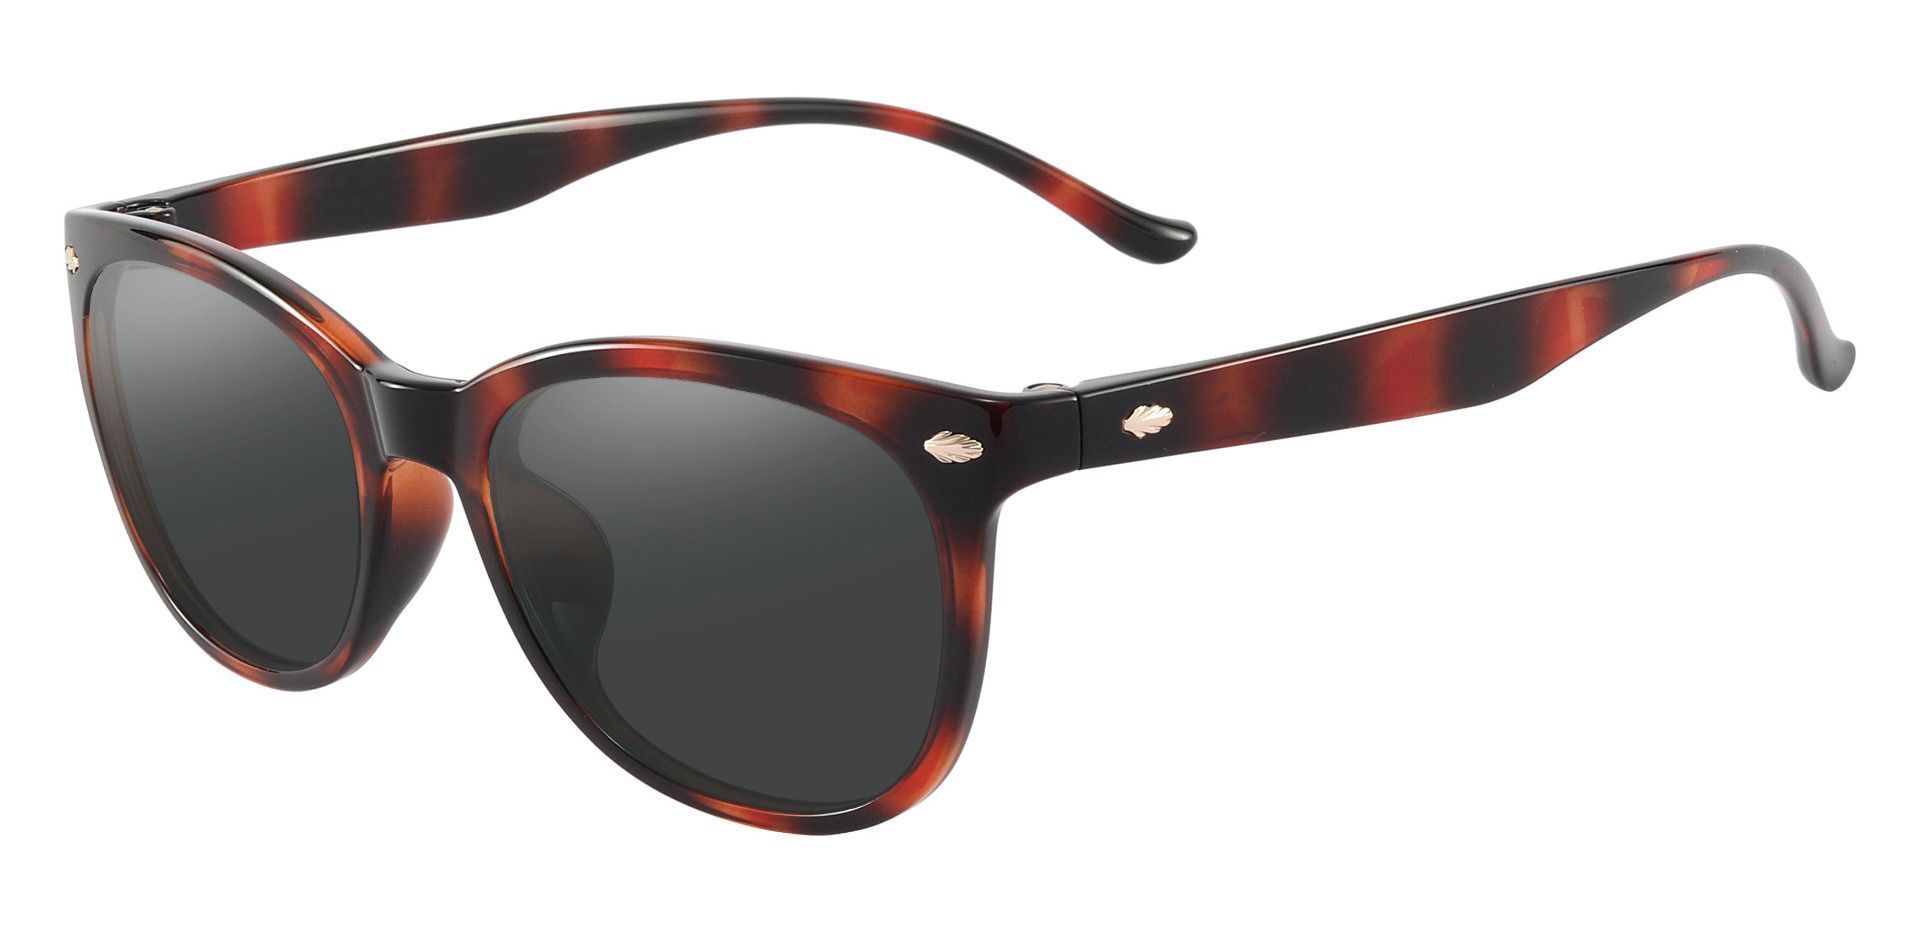 Pavilion Square Lined Bifocal Sunglasses - Tortoise Frame With Gray Lenses